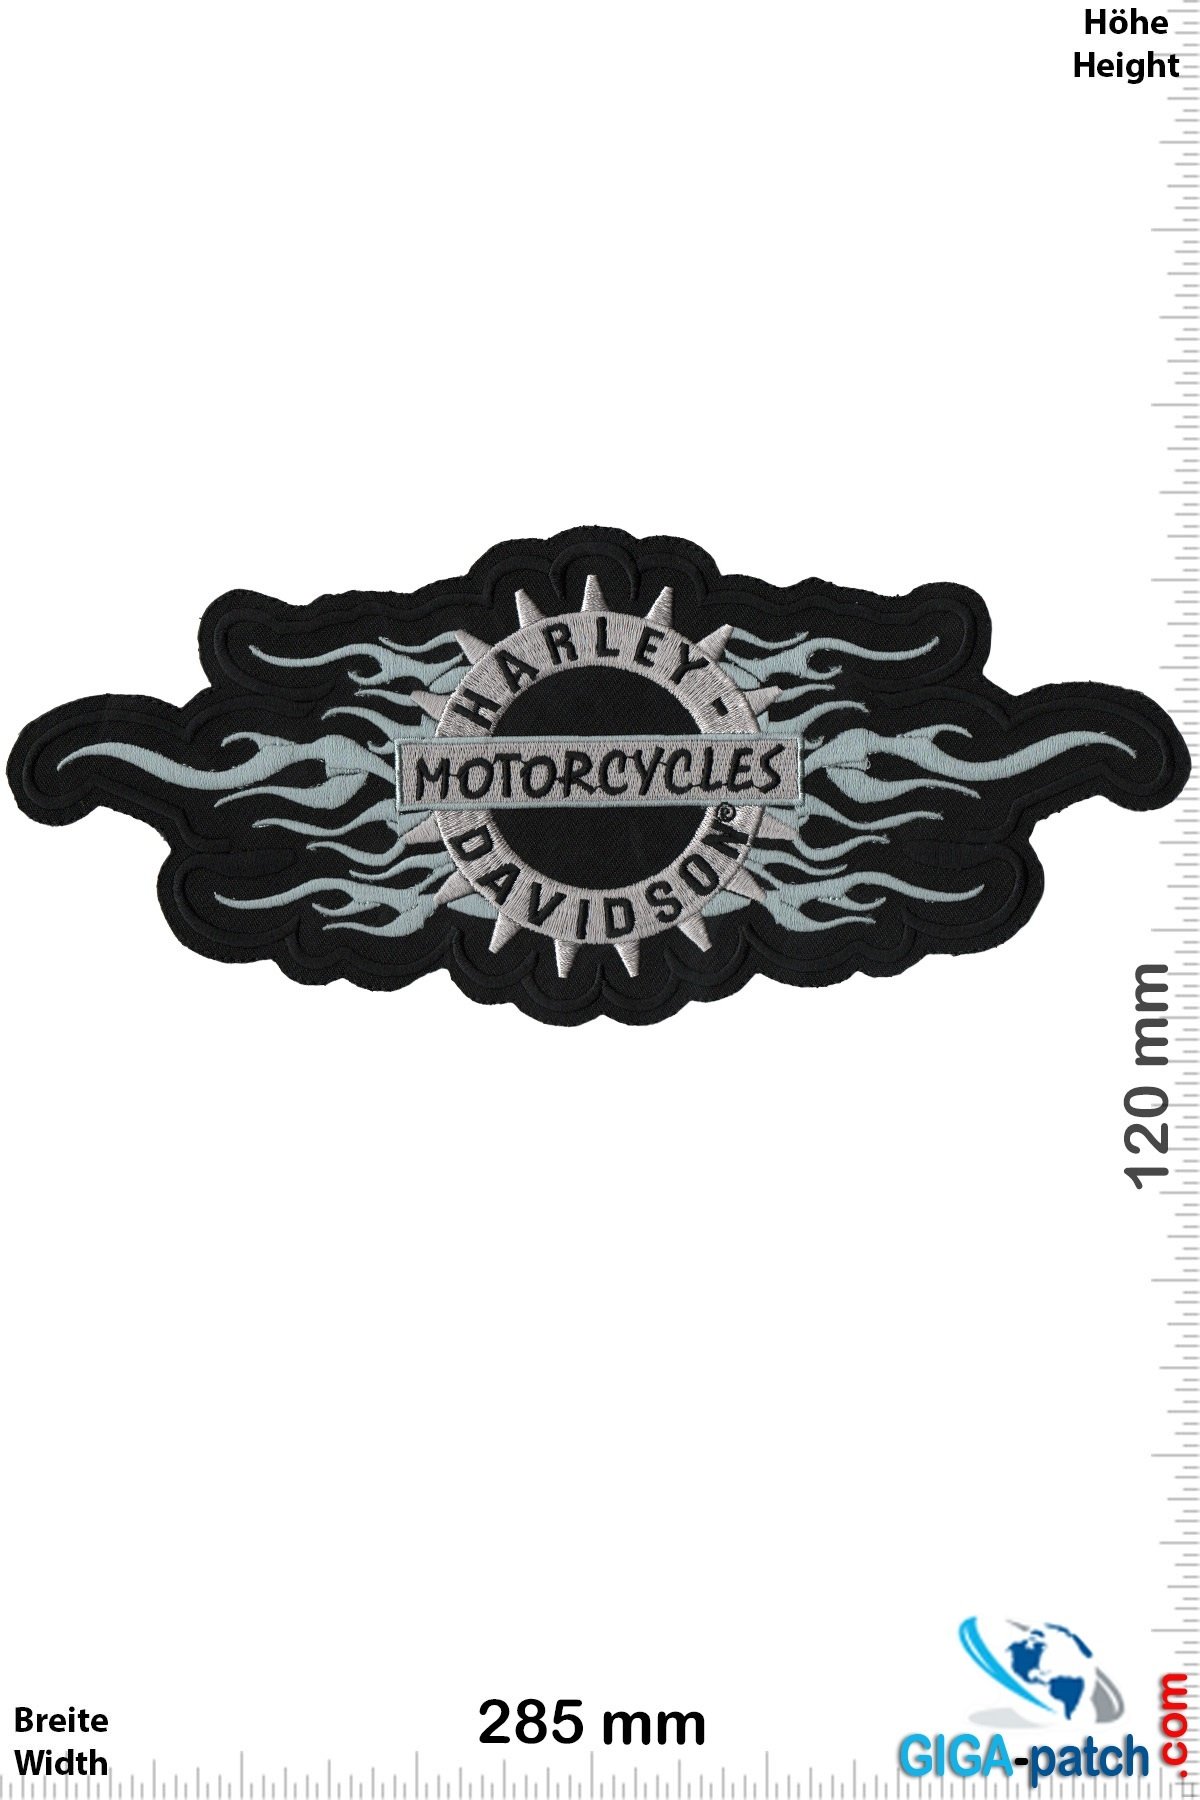 Harley Davidson - Harley Davidson Motorcycles - 28 cm -BIG- Patch - Back  Patches